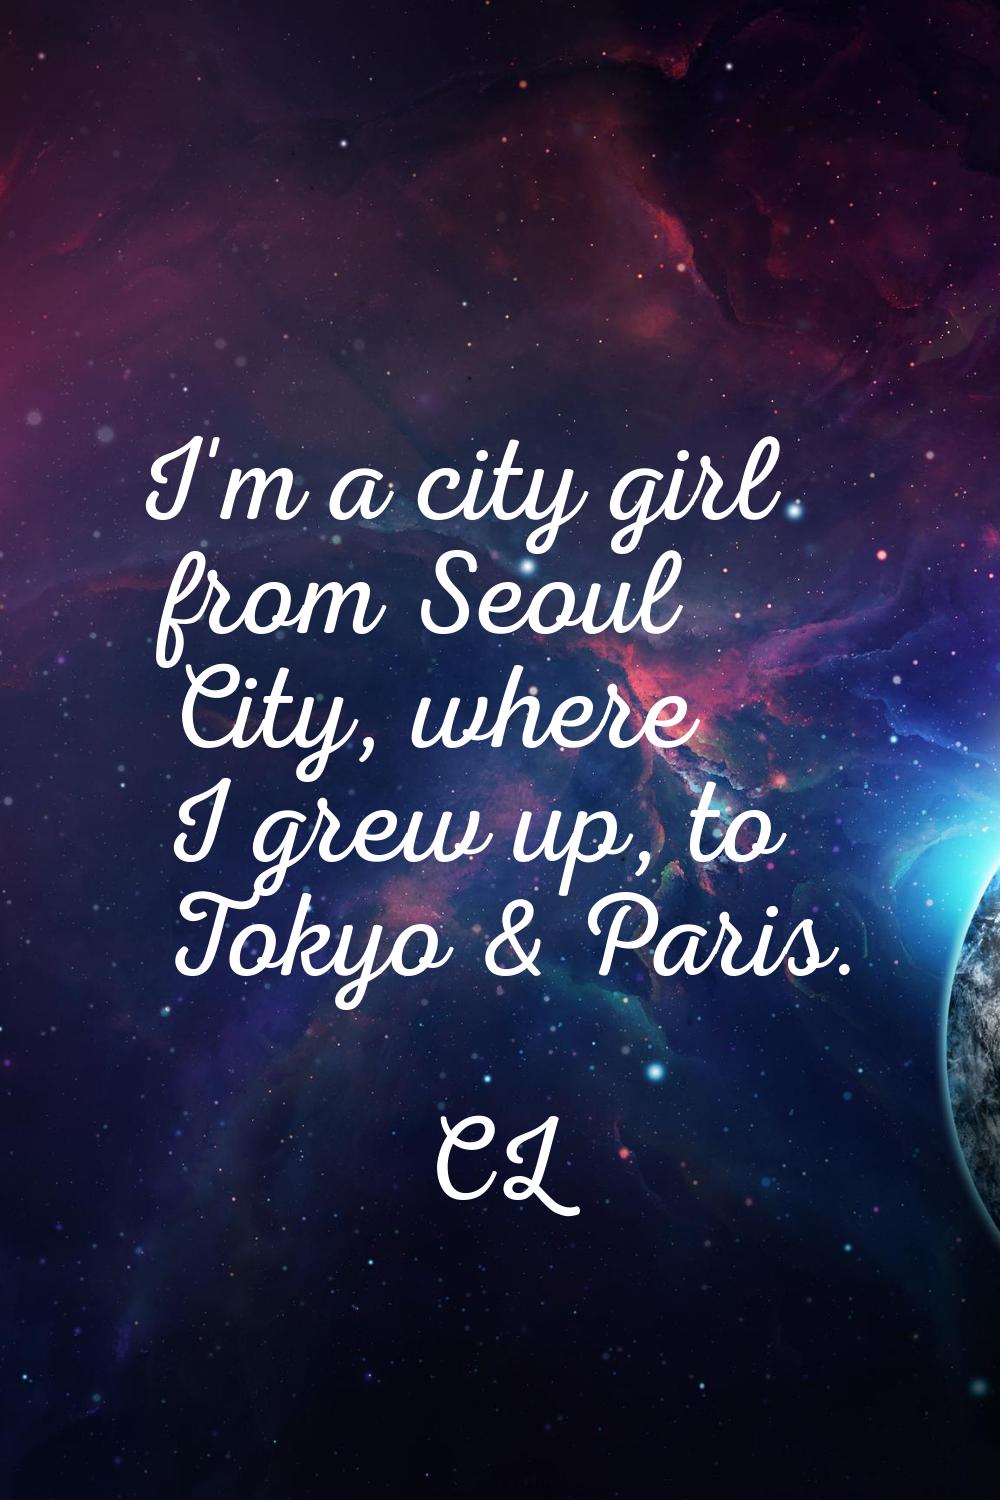 I'm a city girl from Seoul City, where I grew up, to Tokyo & Paris.